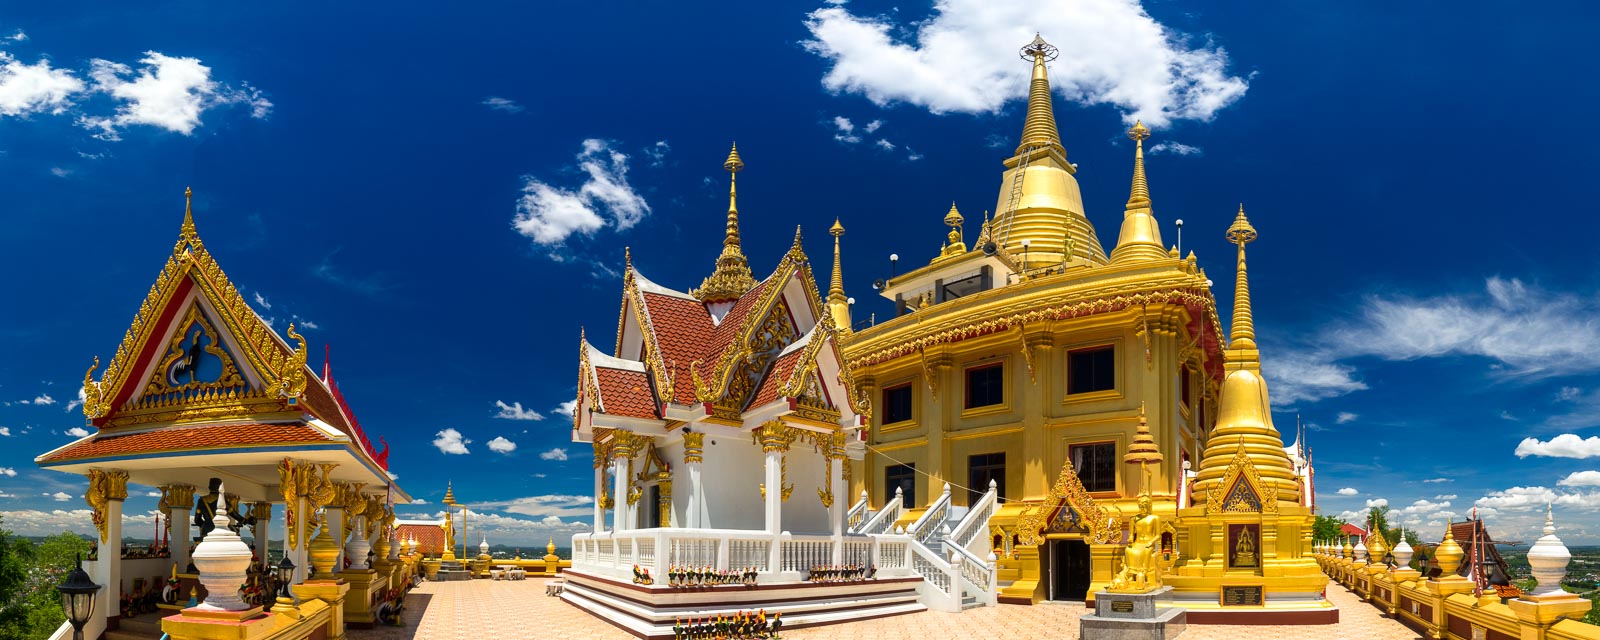 Wat Khiri Wong Temple in Nakhon Sawan Province